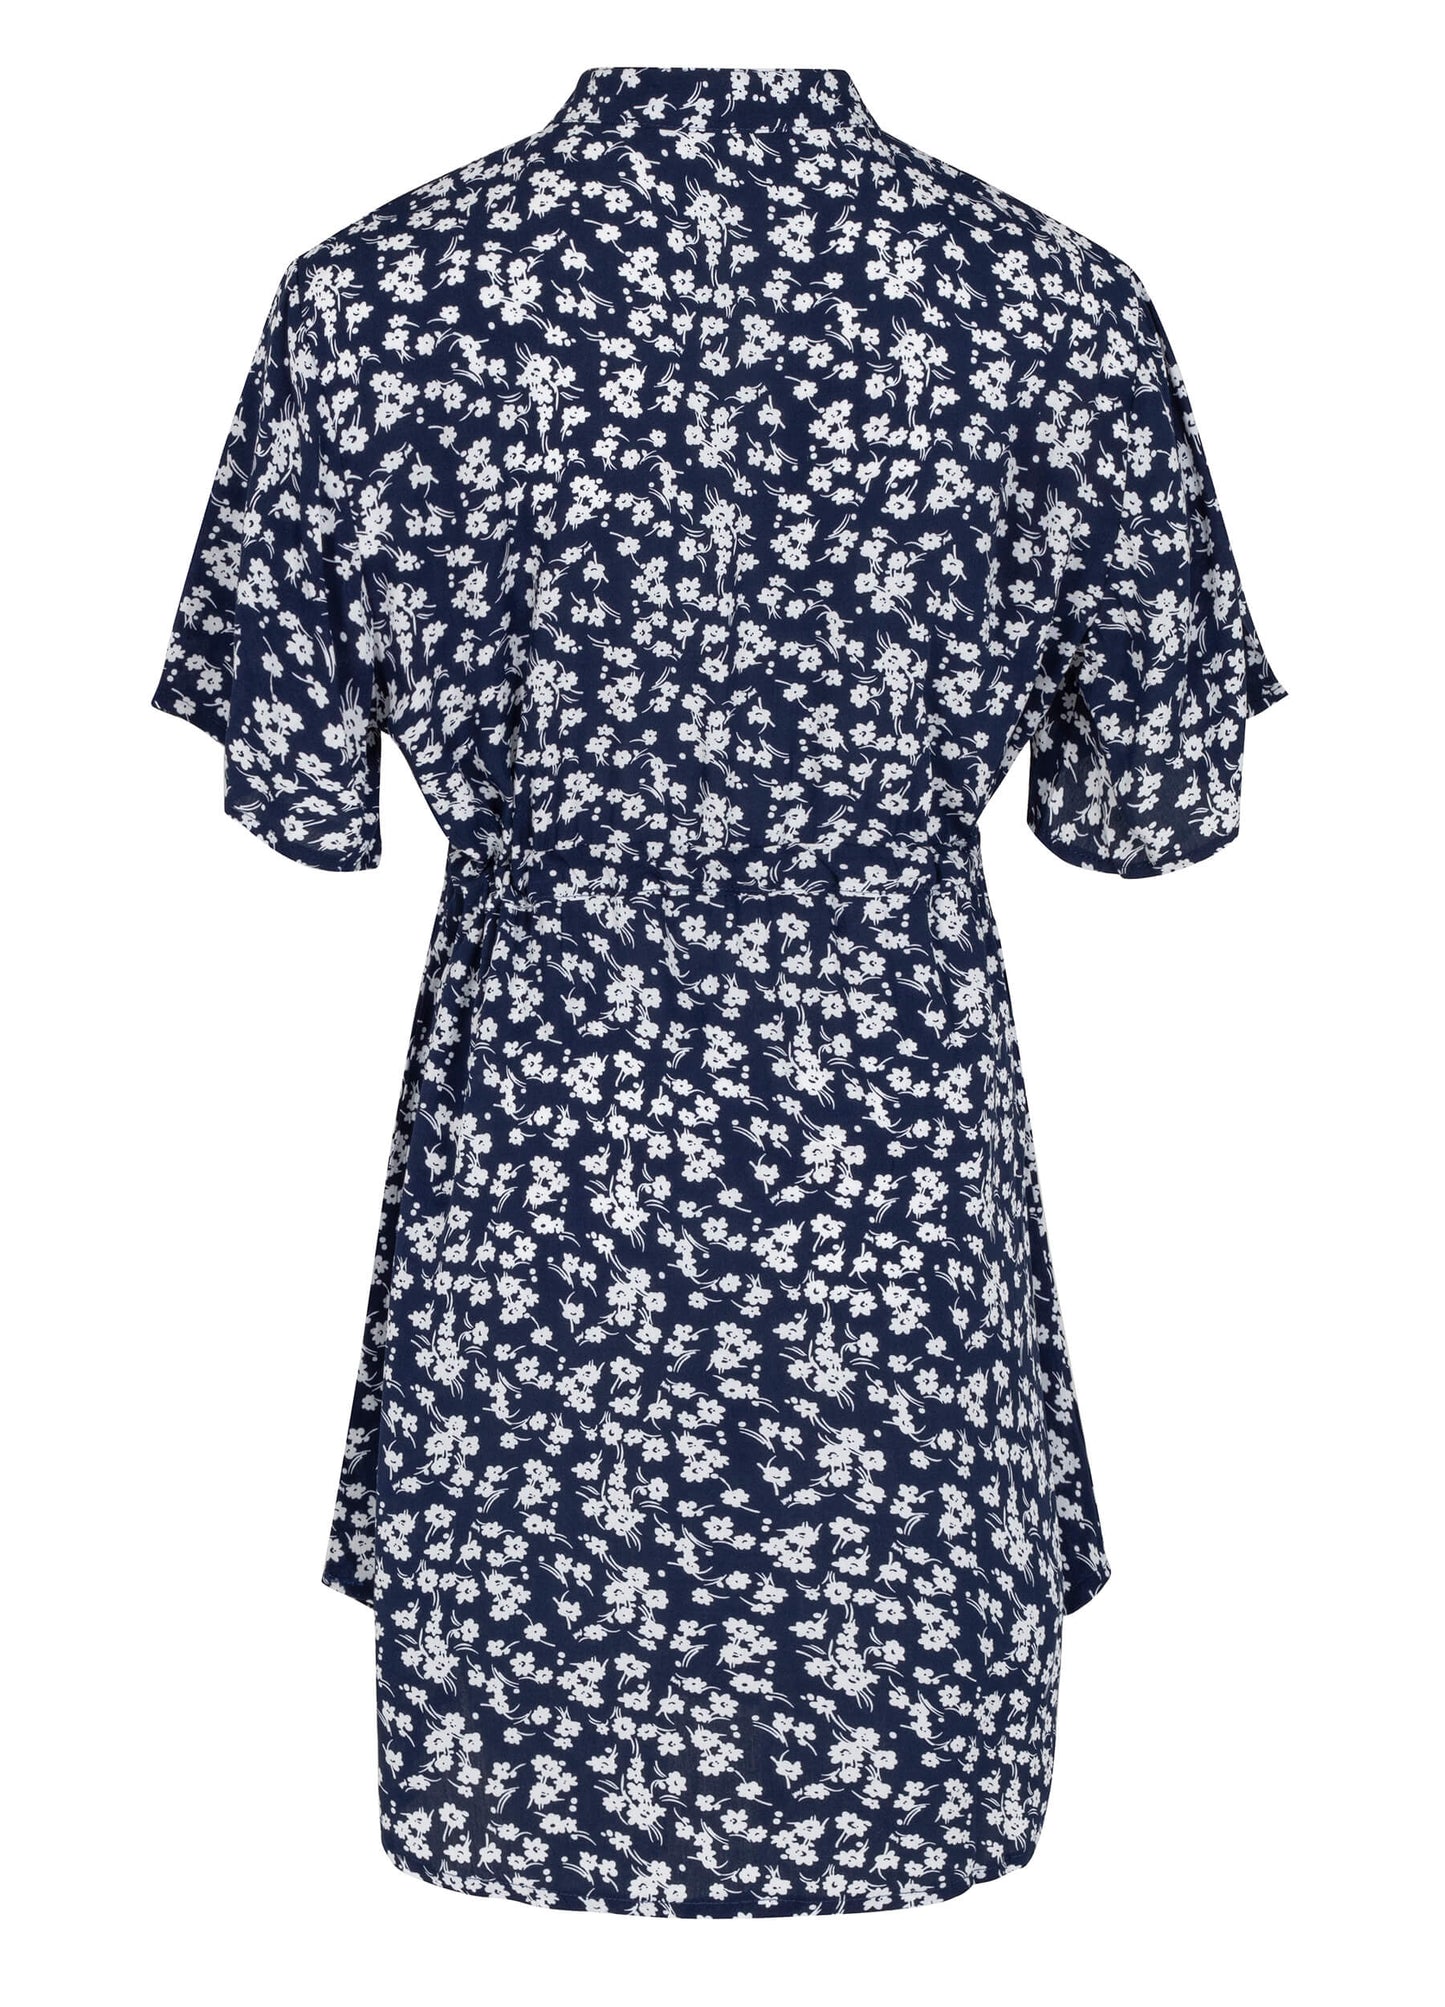 MECALA Women's Summer Floral Print V-Neck Short Sleeve Short Dress-Navy Blue